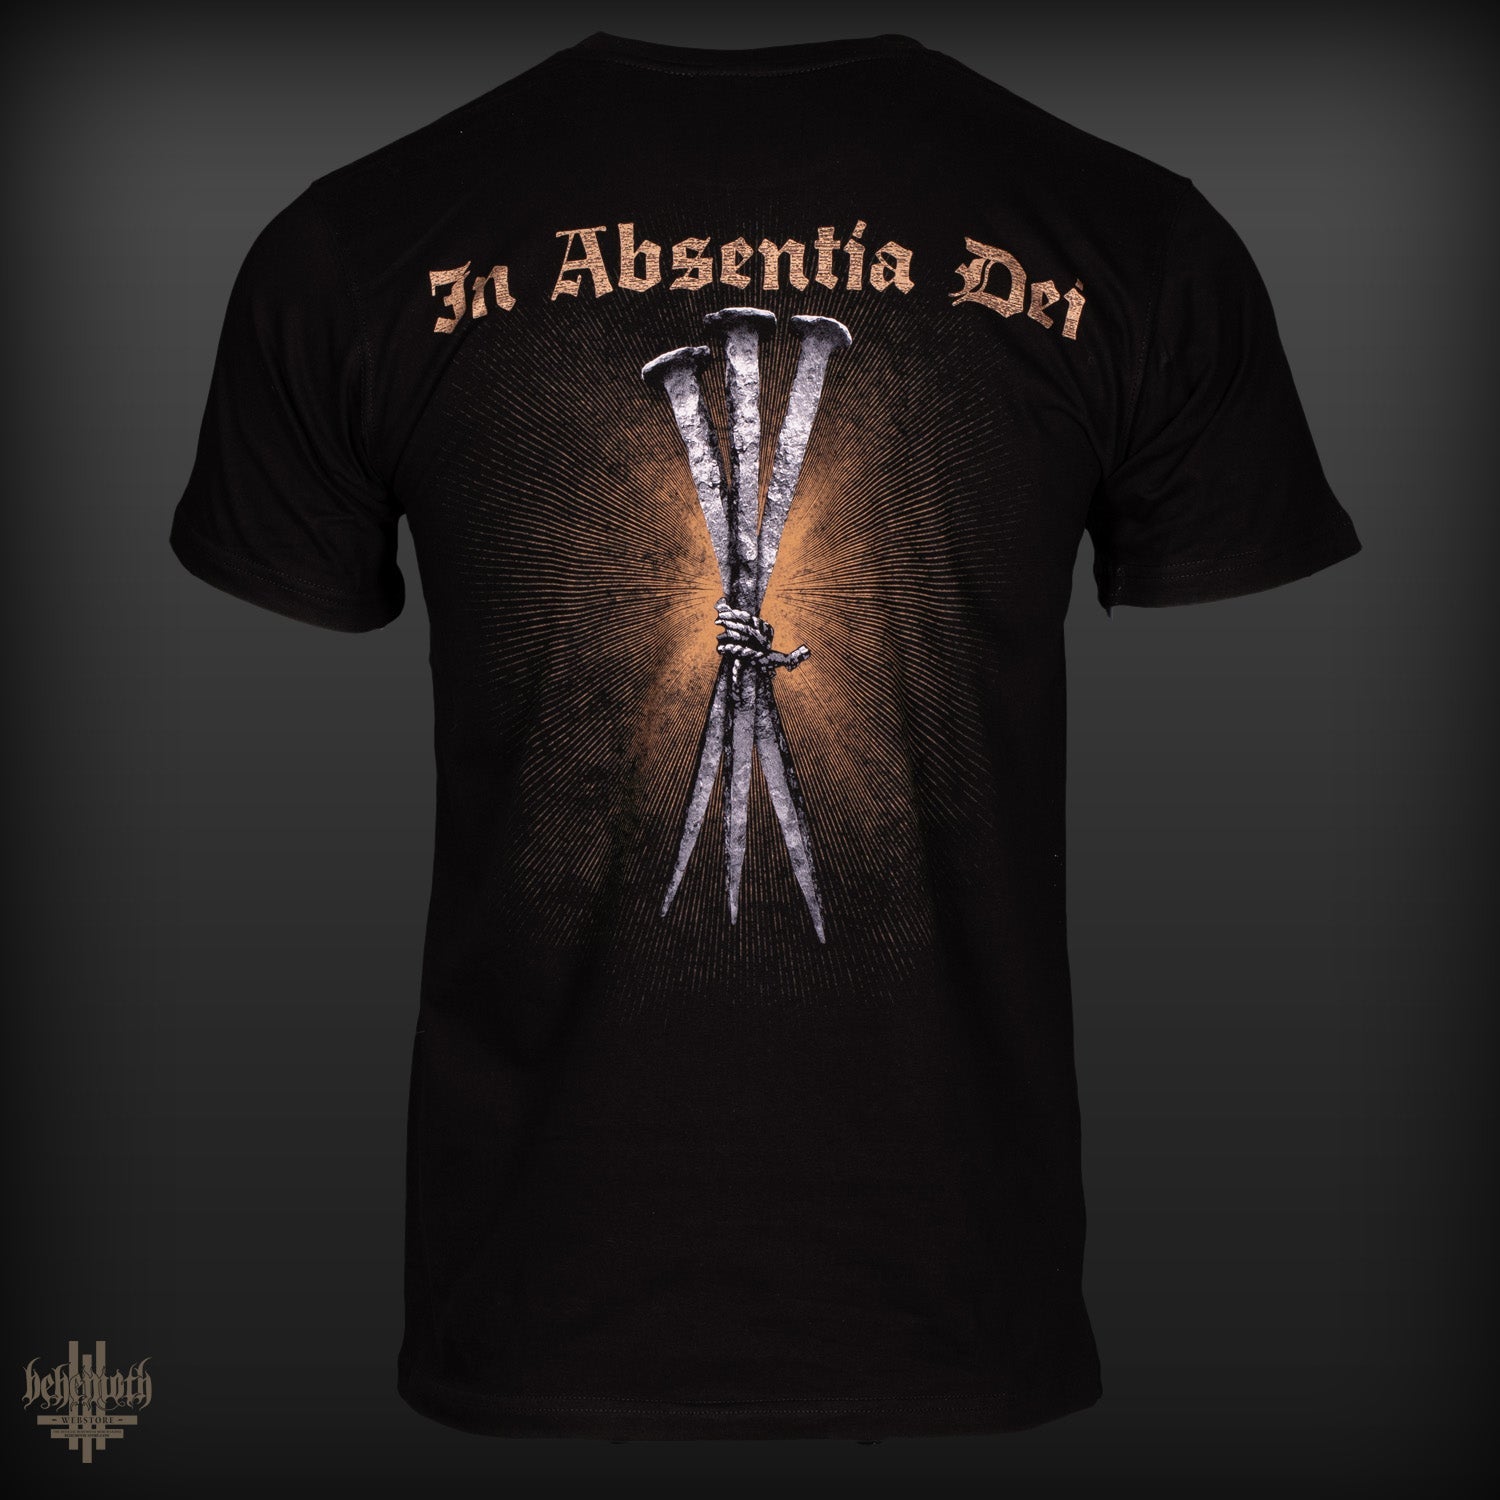 Behemoth 'In Absentia Dei' T-Shirt